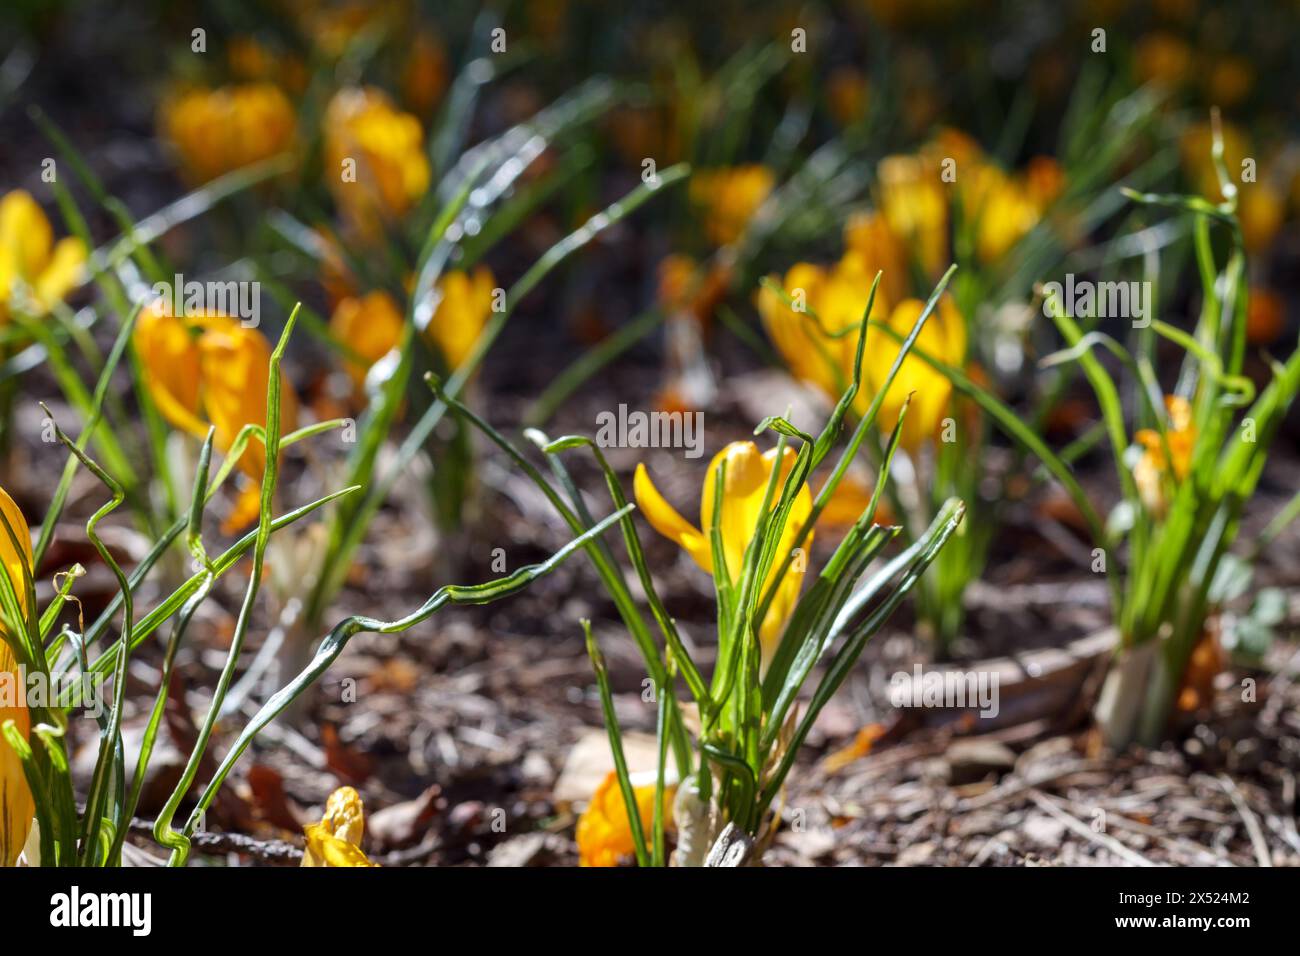 yellow crocus flowers in the grass Stock Photo